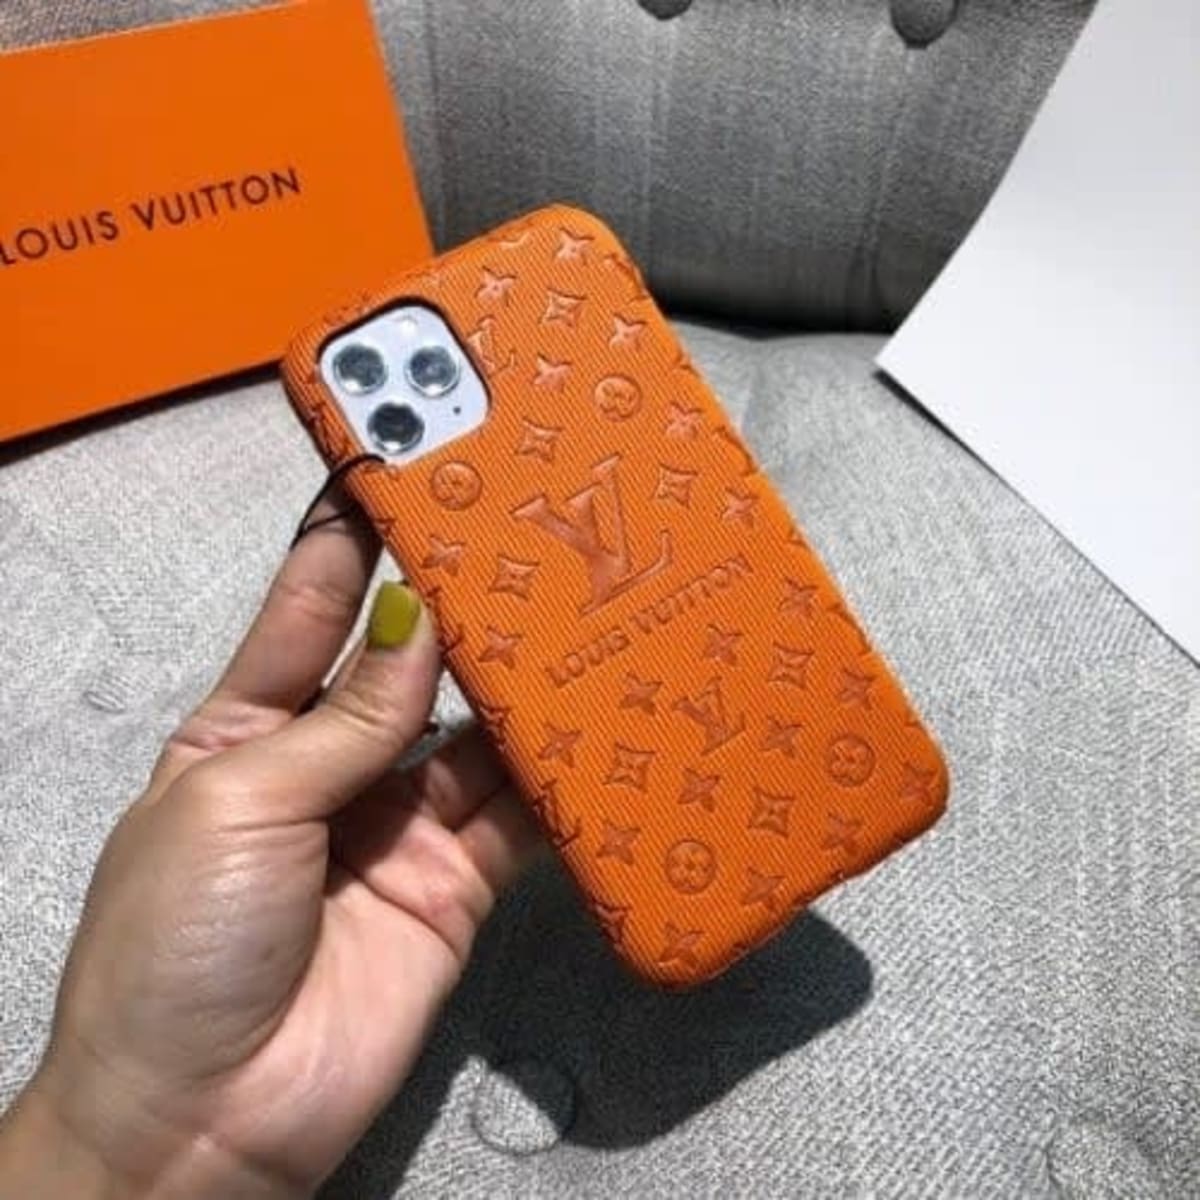 iSHOP Ghana - Louis Vuitton iPhone 11 Pro Max Trunk Case